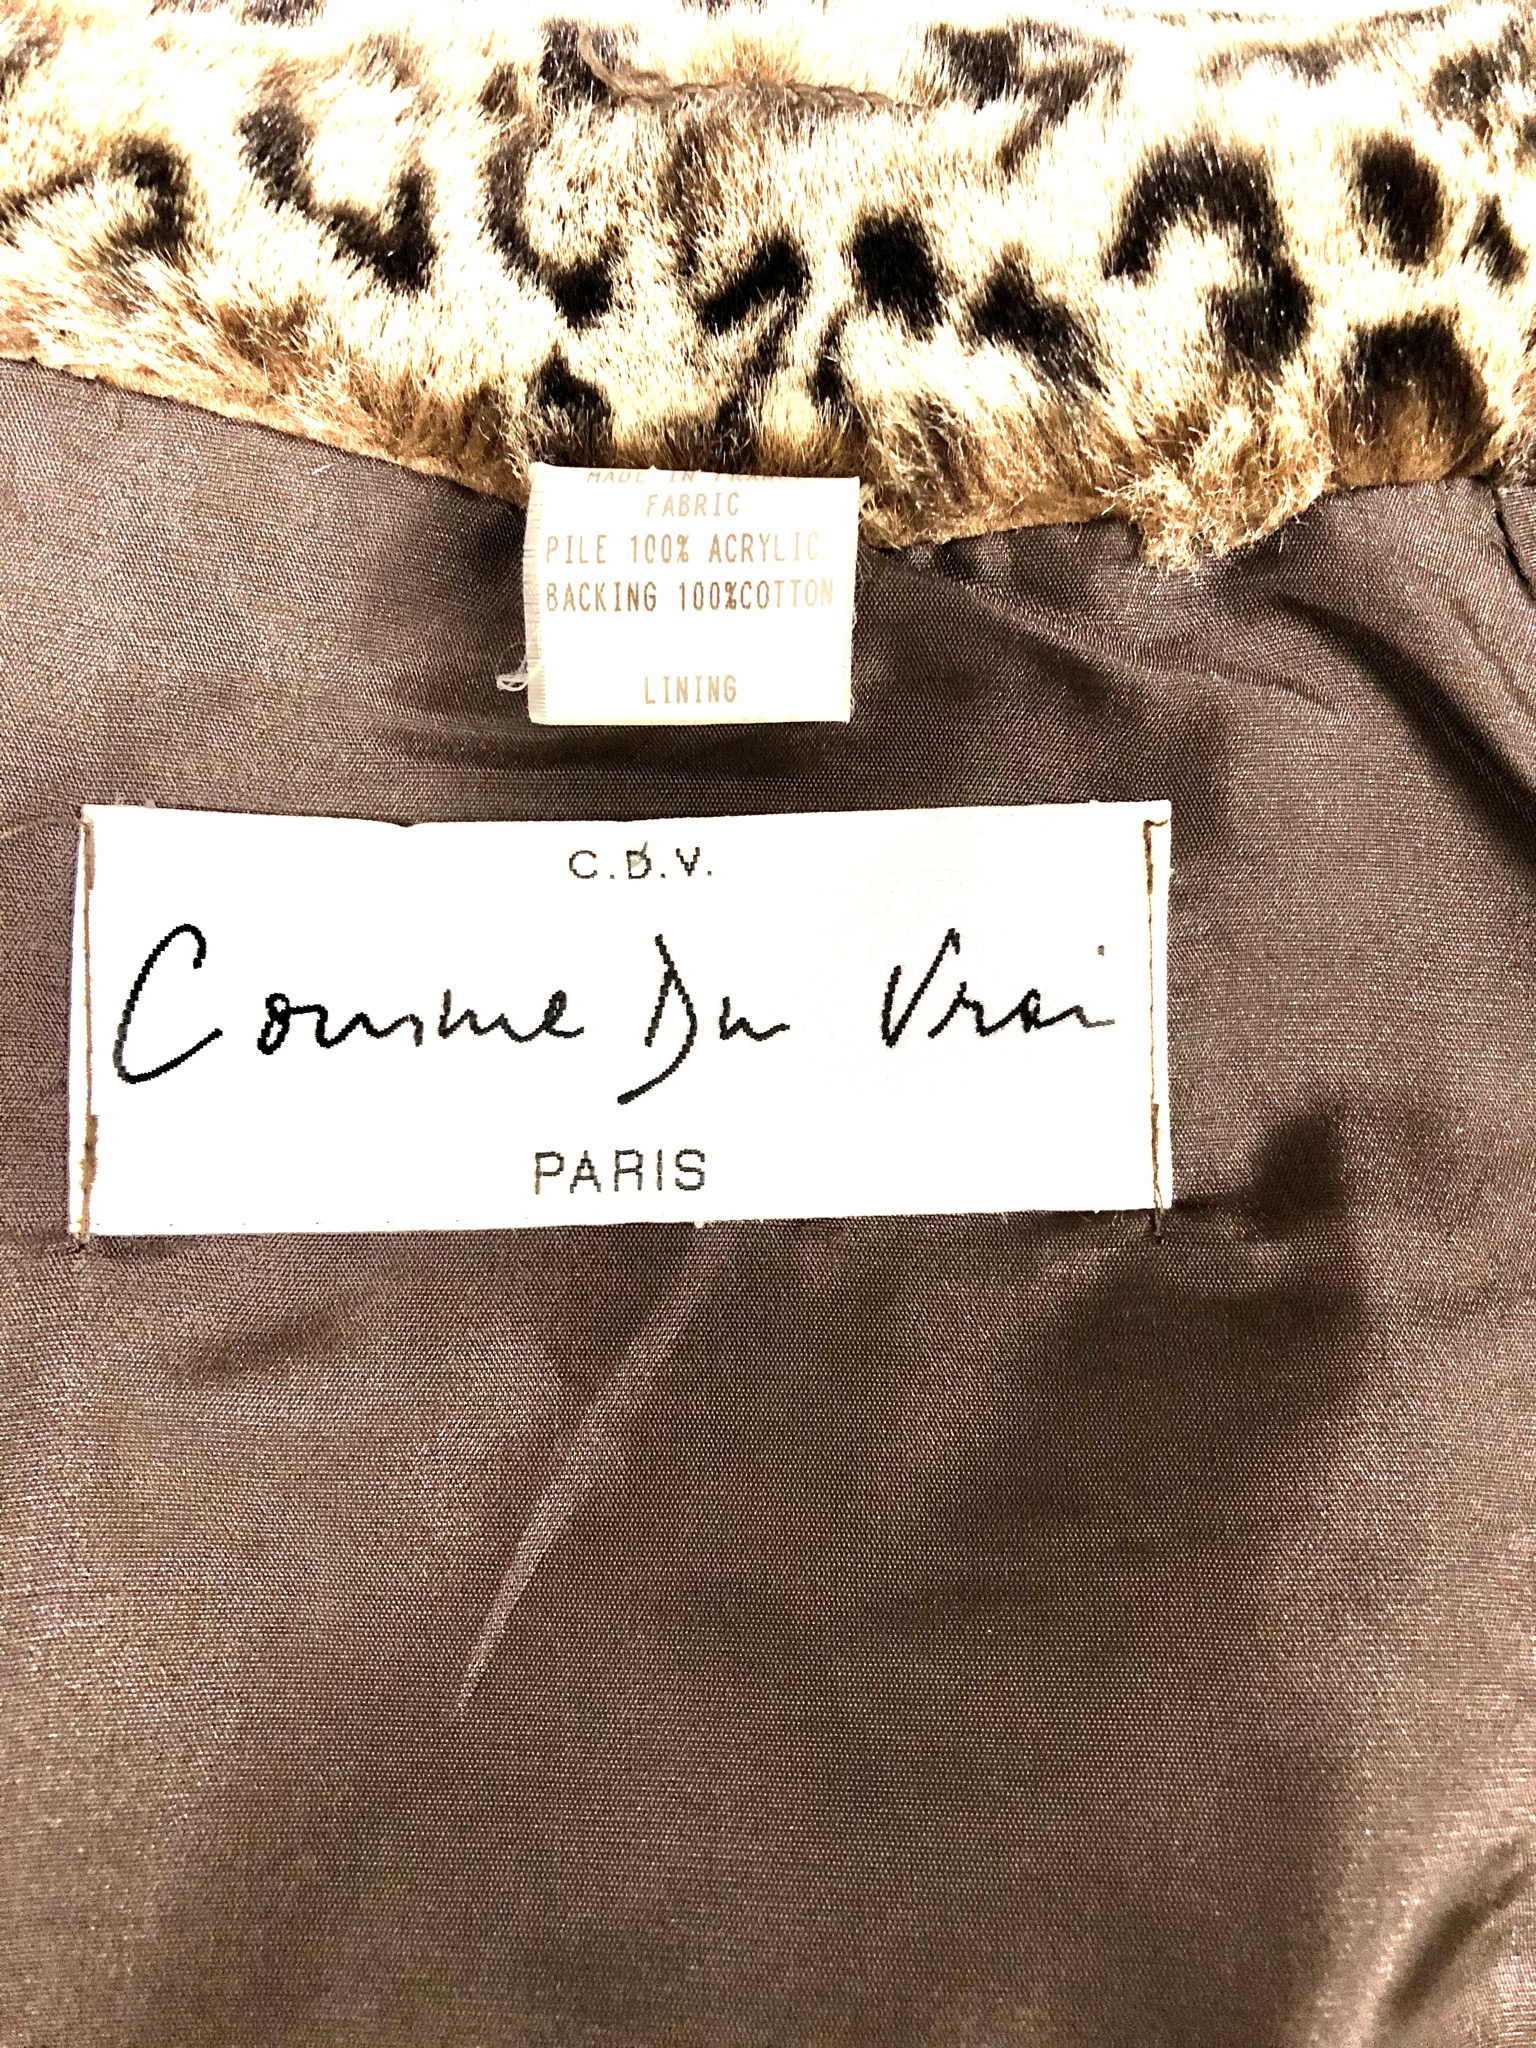 Paris, France, Detail, Fur Coat with slogan, on Display, interior